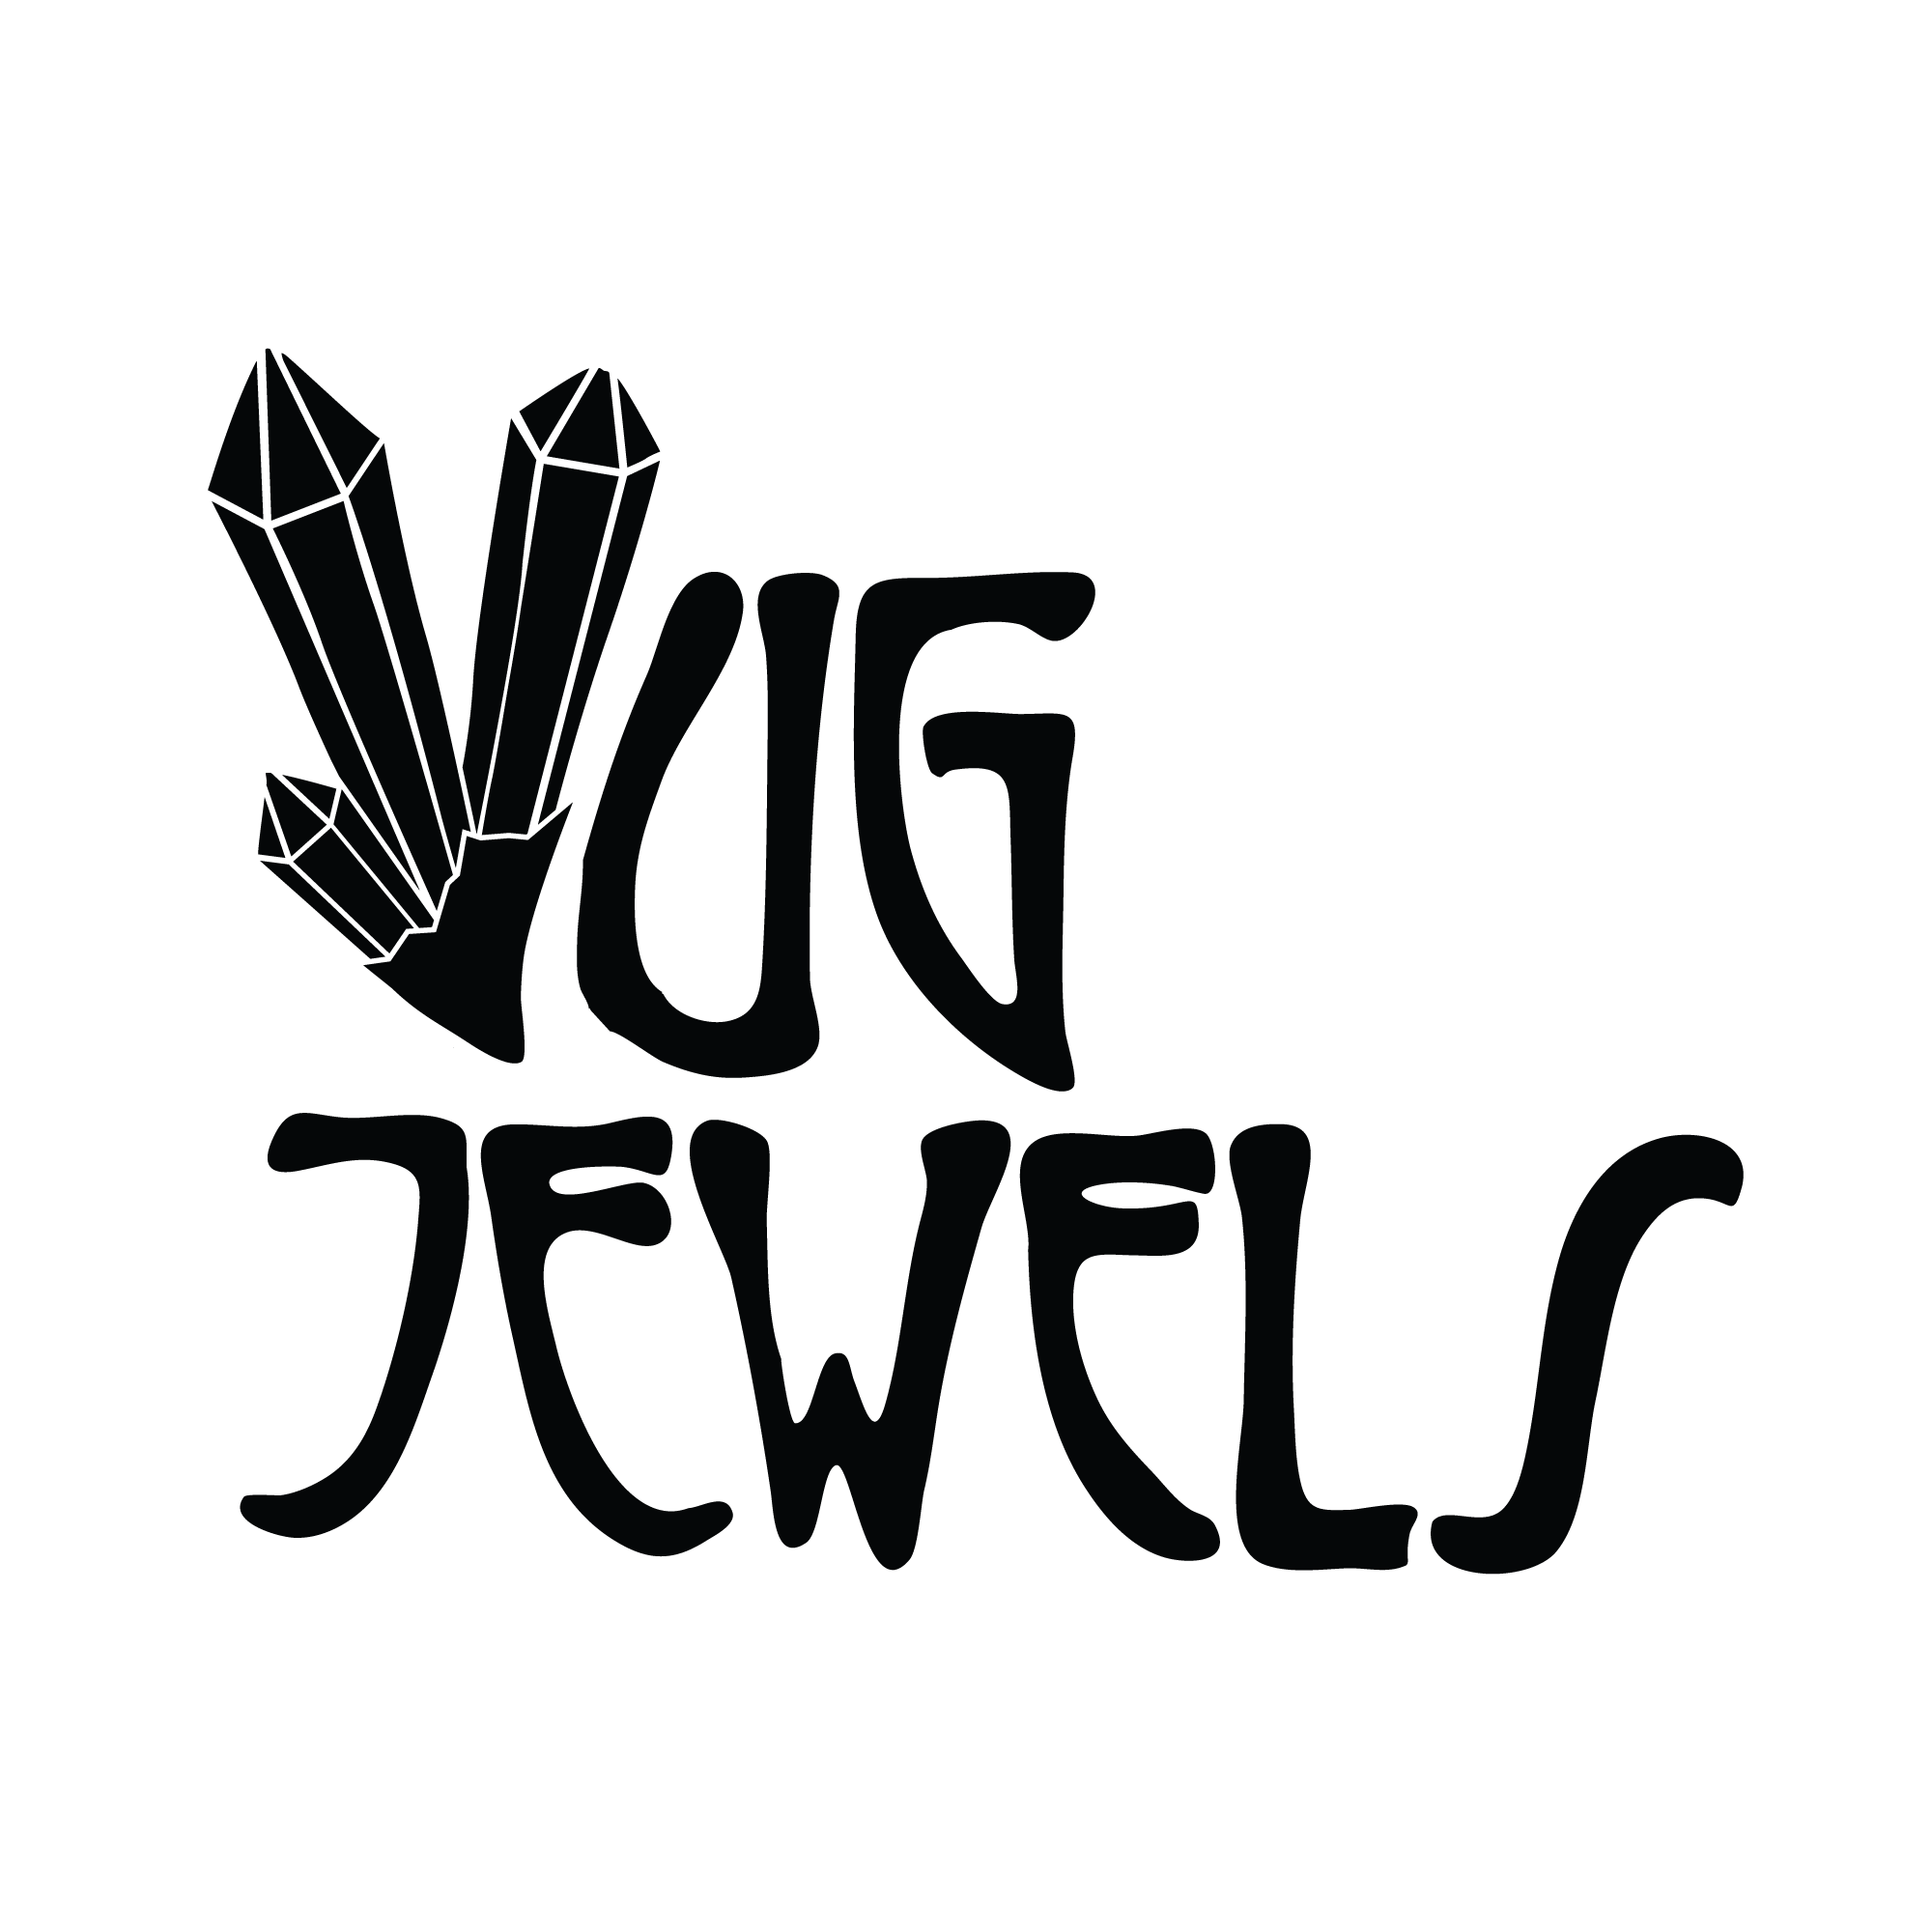 Vug Jewels